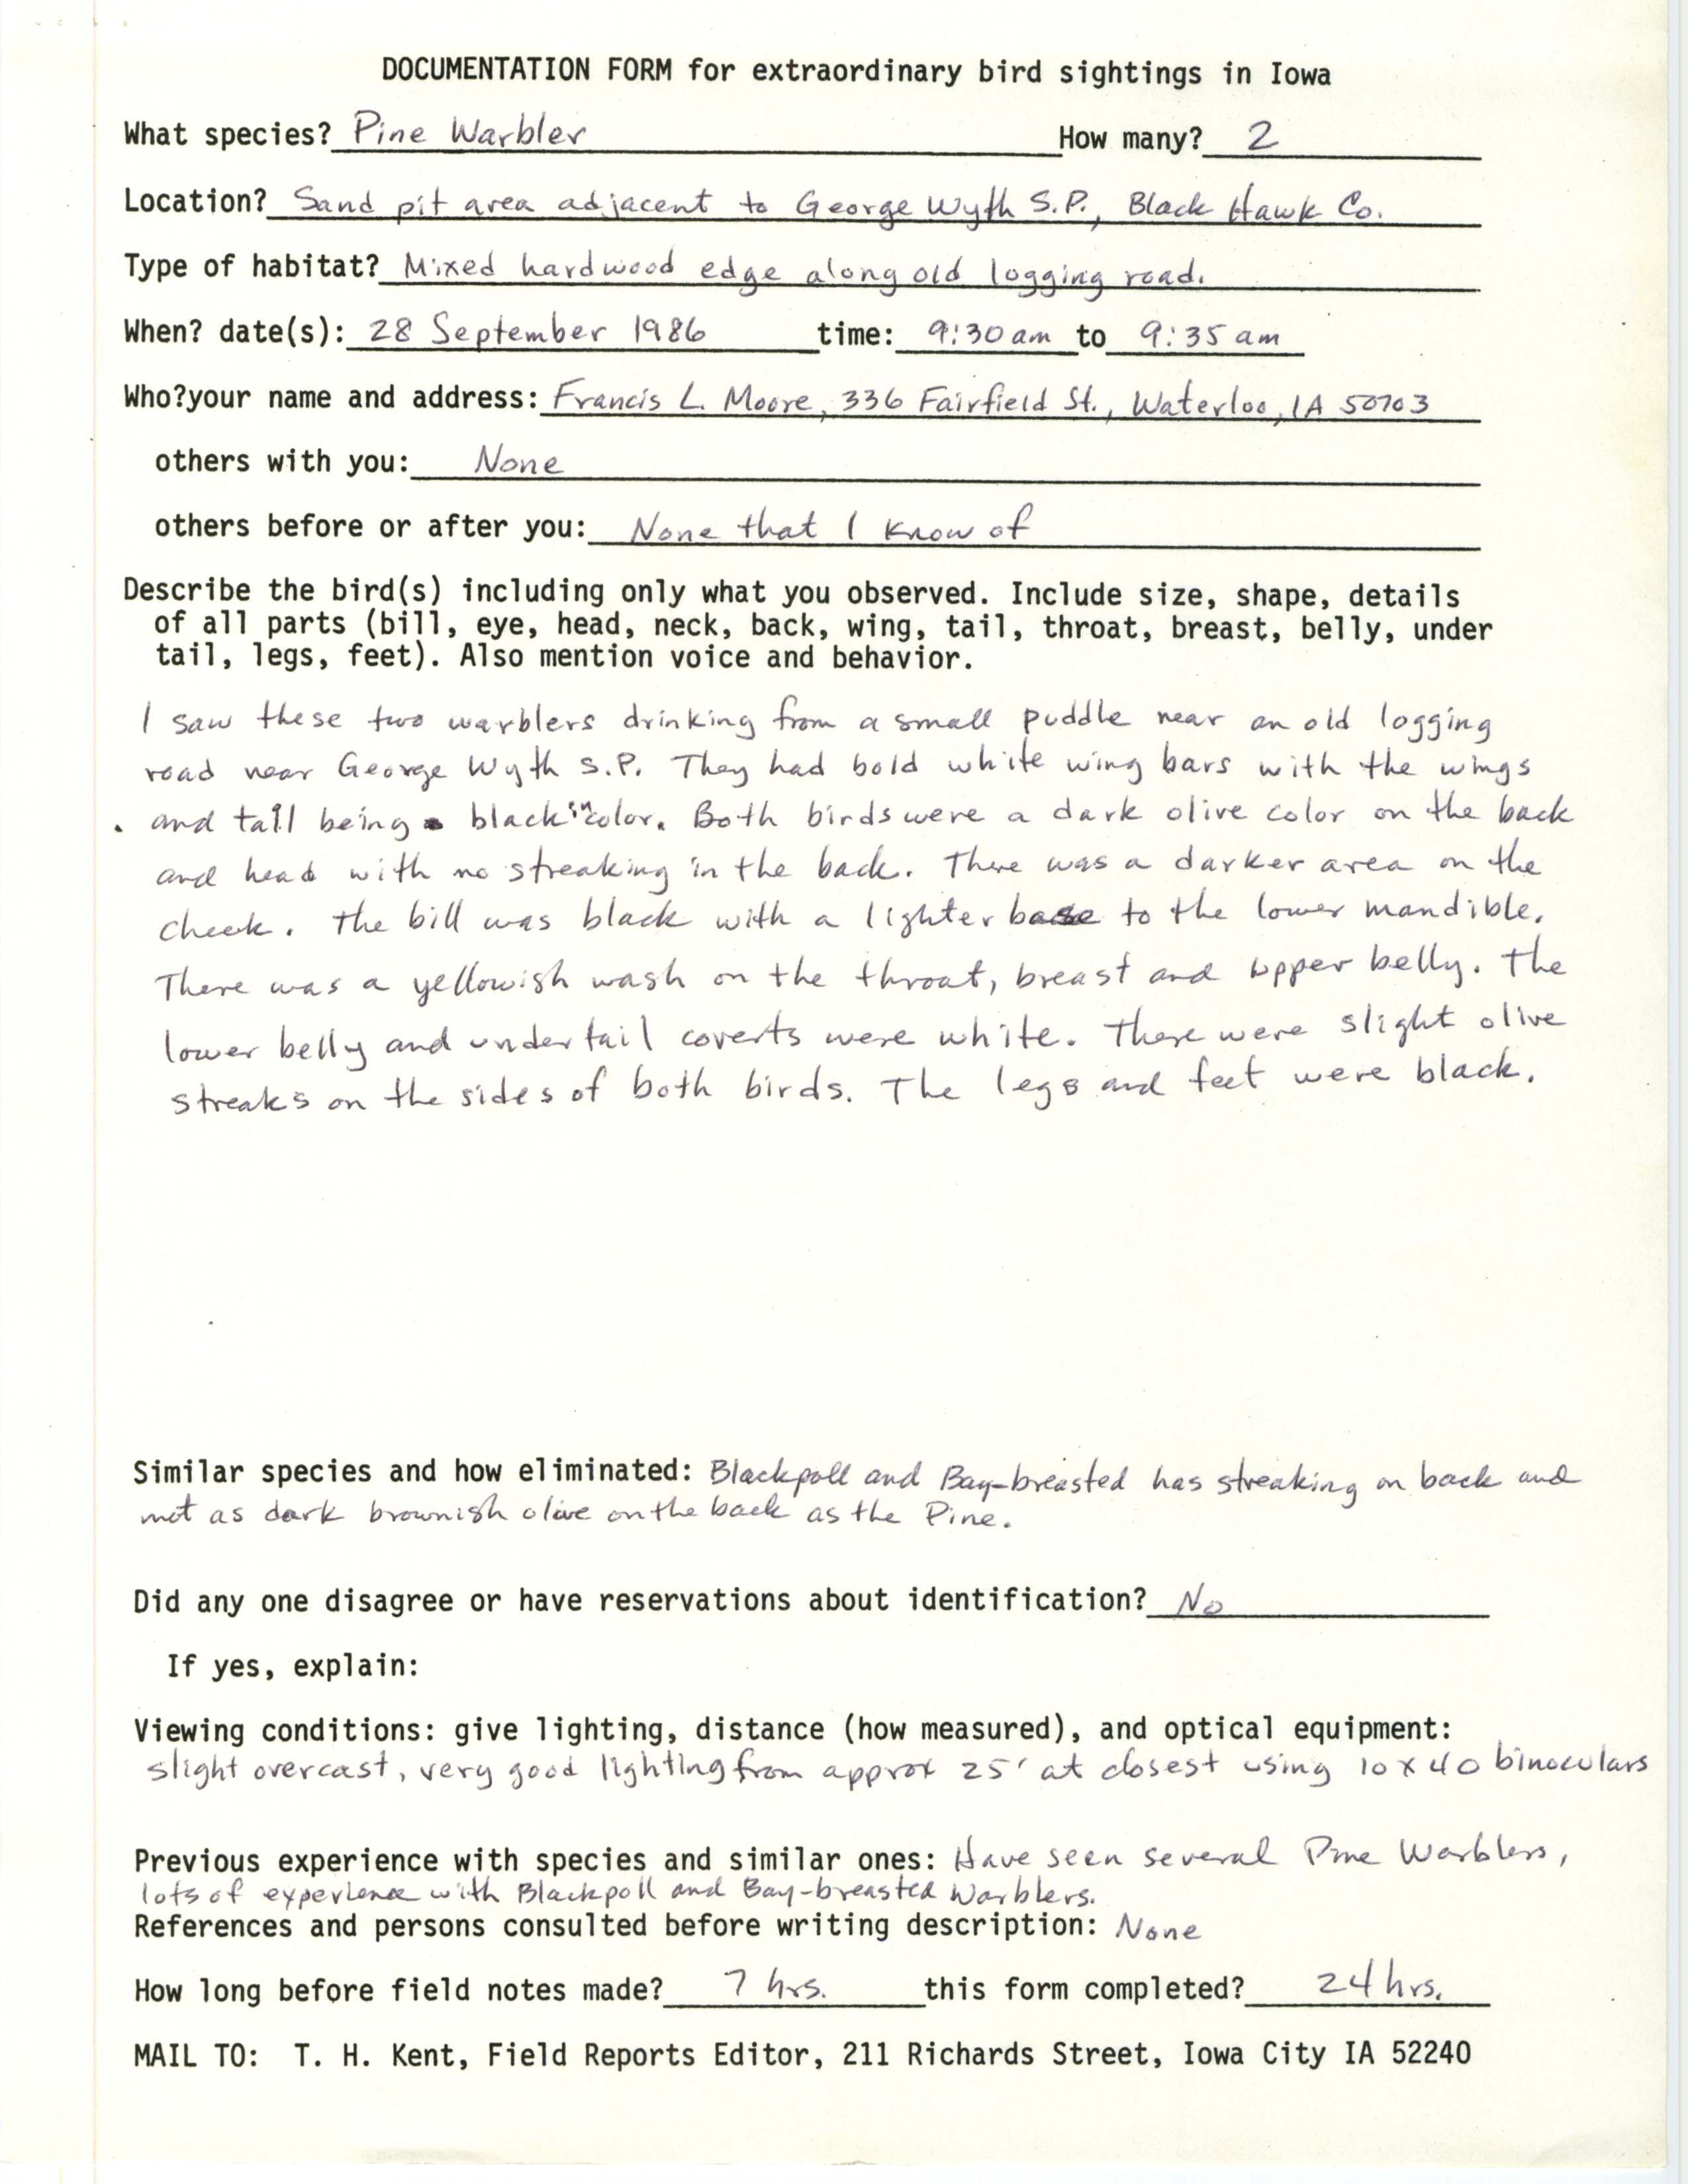 Rare bird documentation form for Pine Warbler near George Wyth State Park, 1986